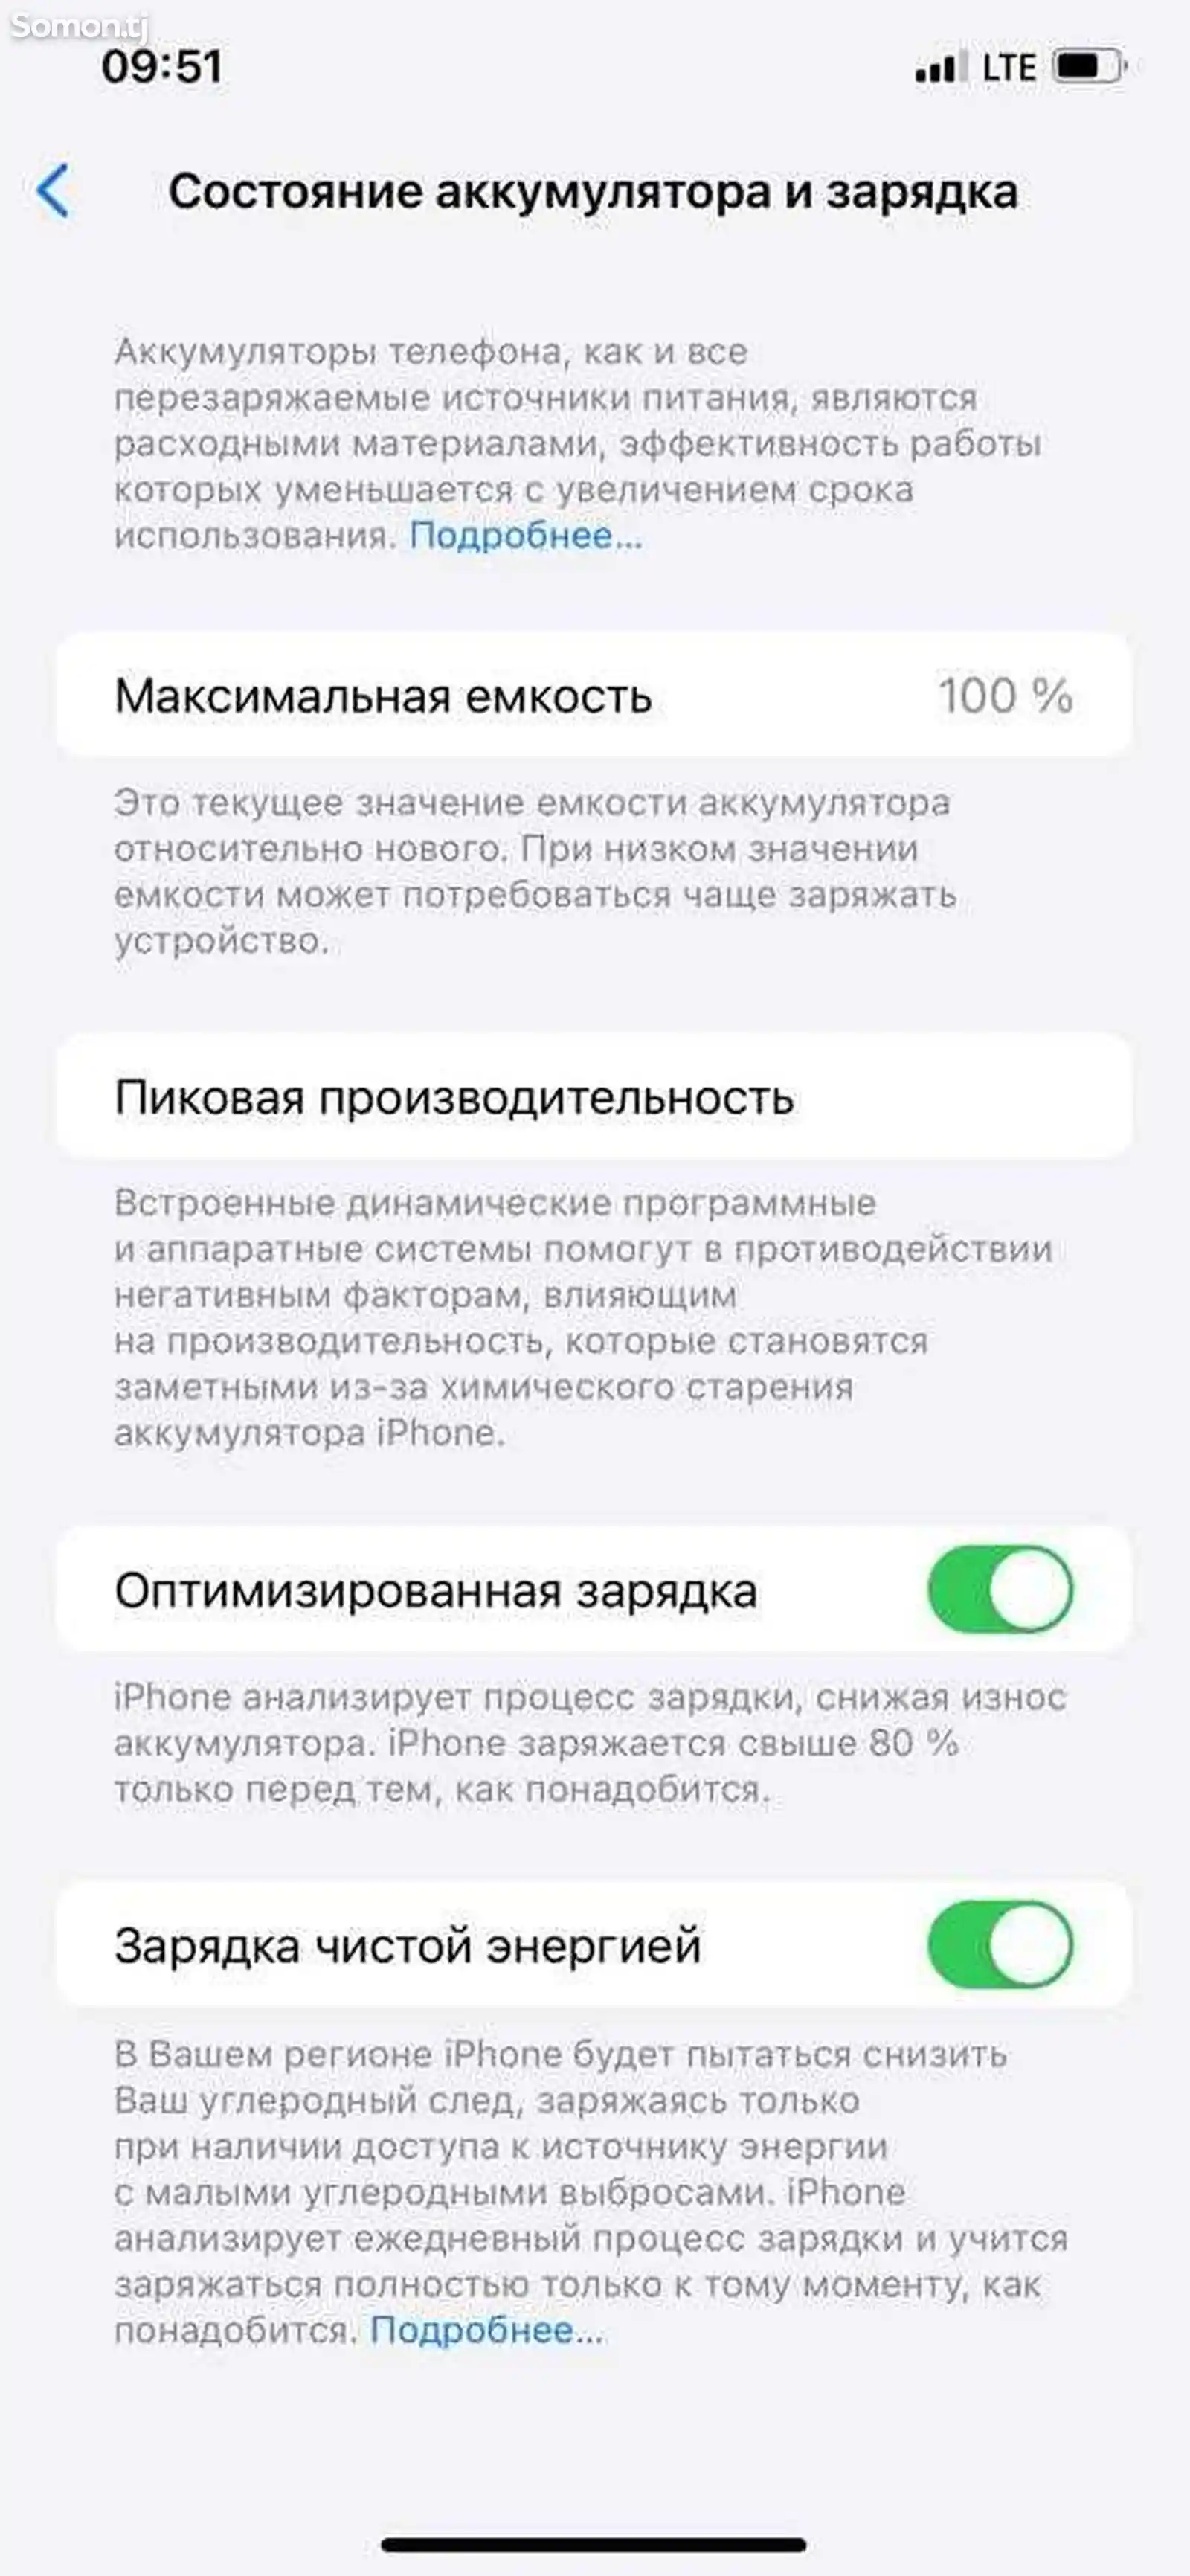 Apple iPhone 11 Pro Max, 256 gb, Midnight Green-1